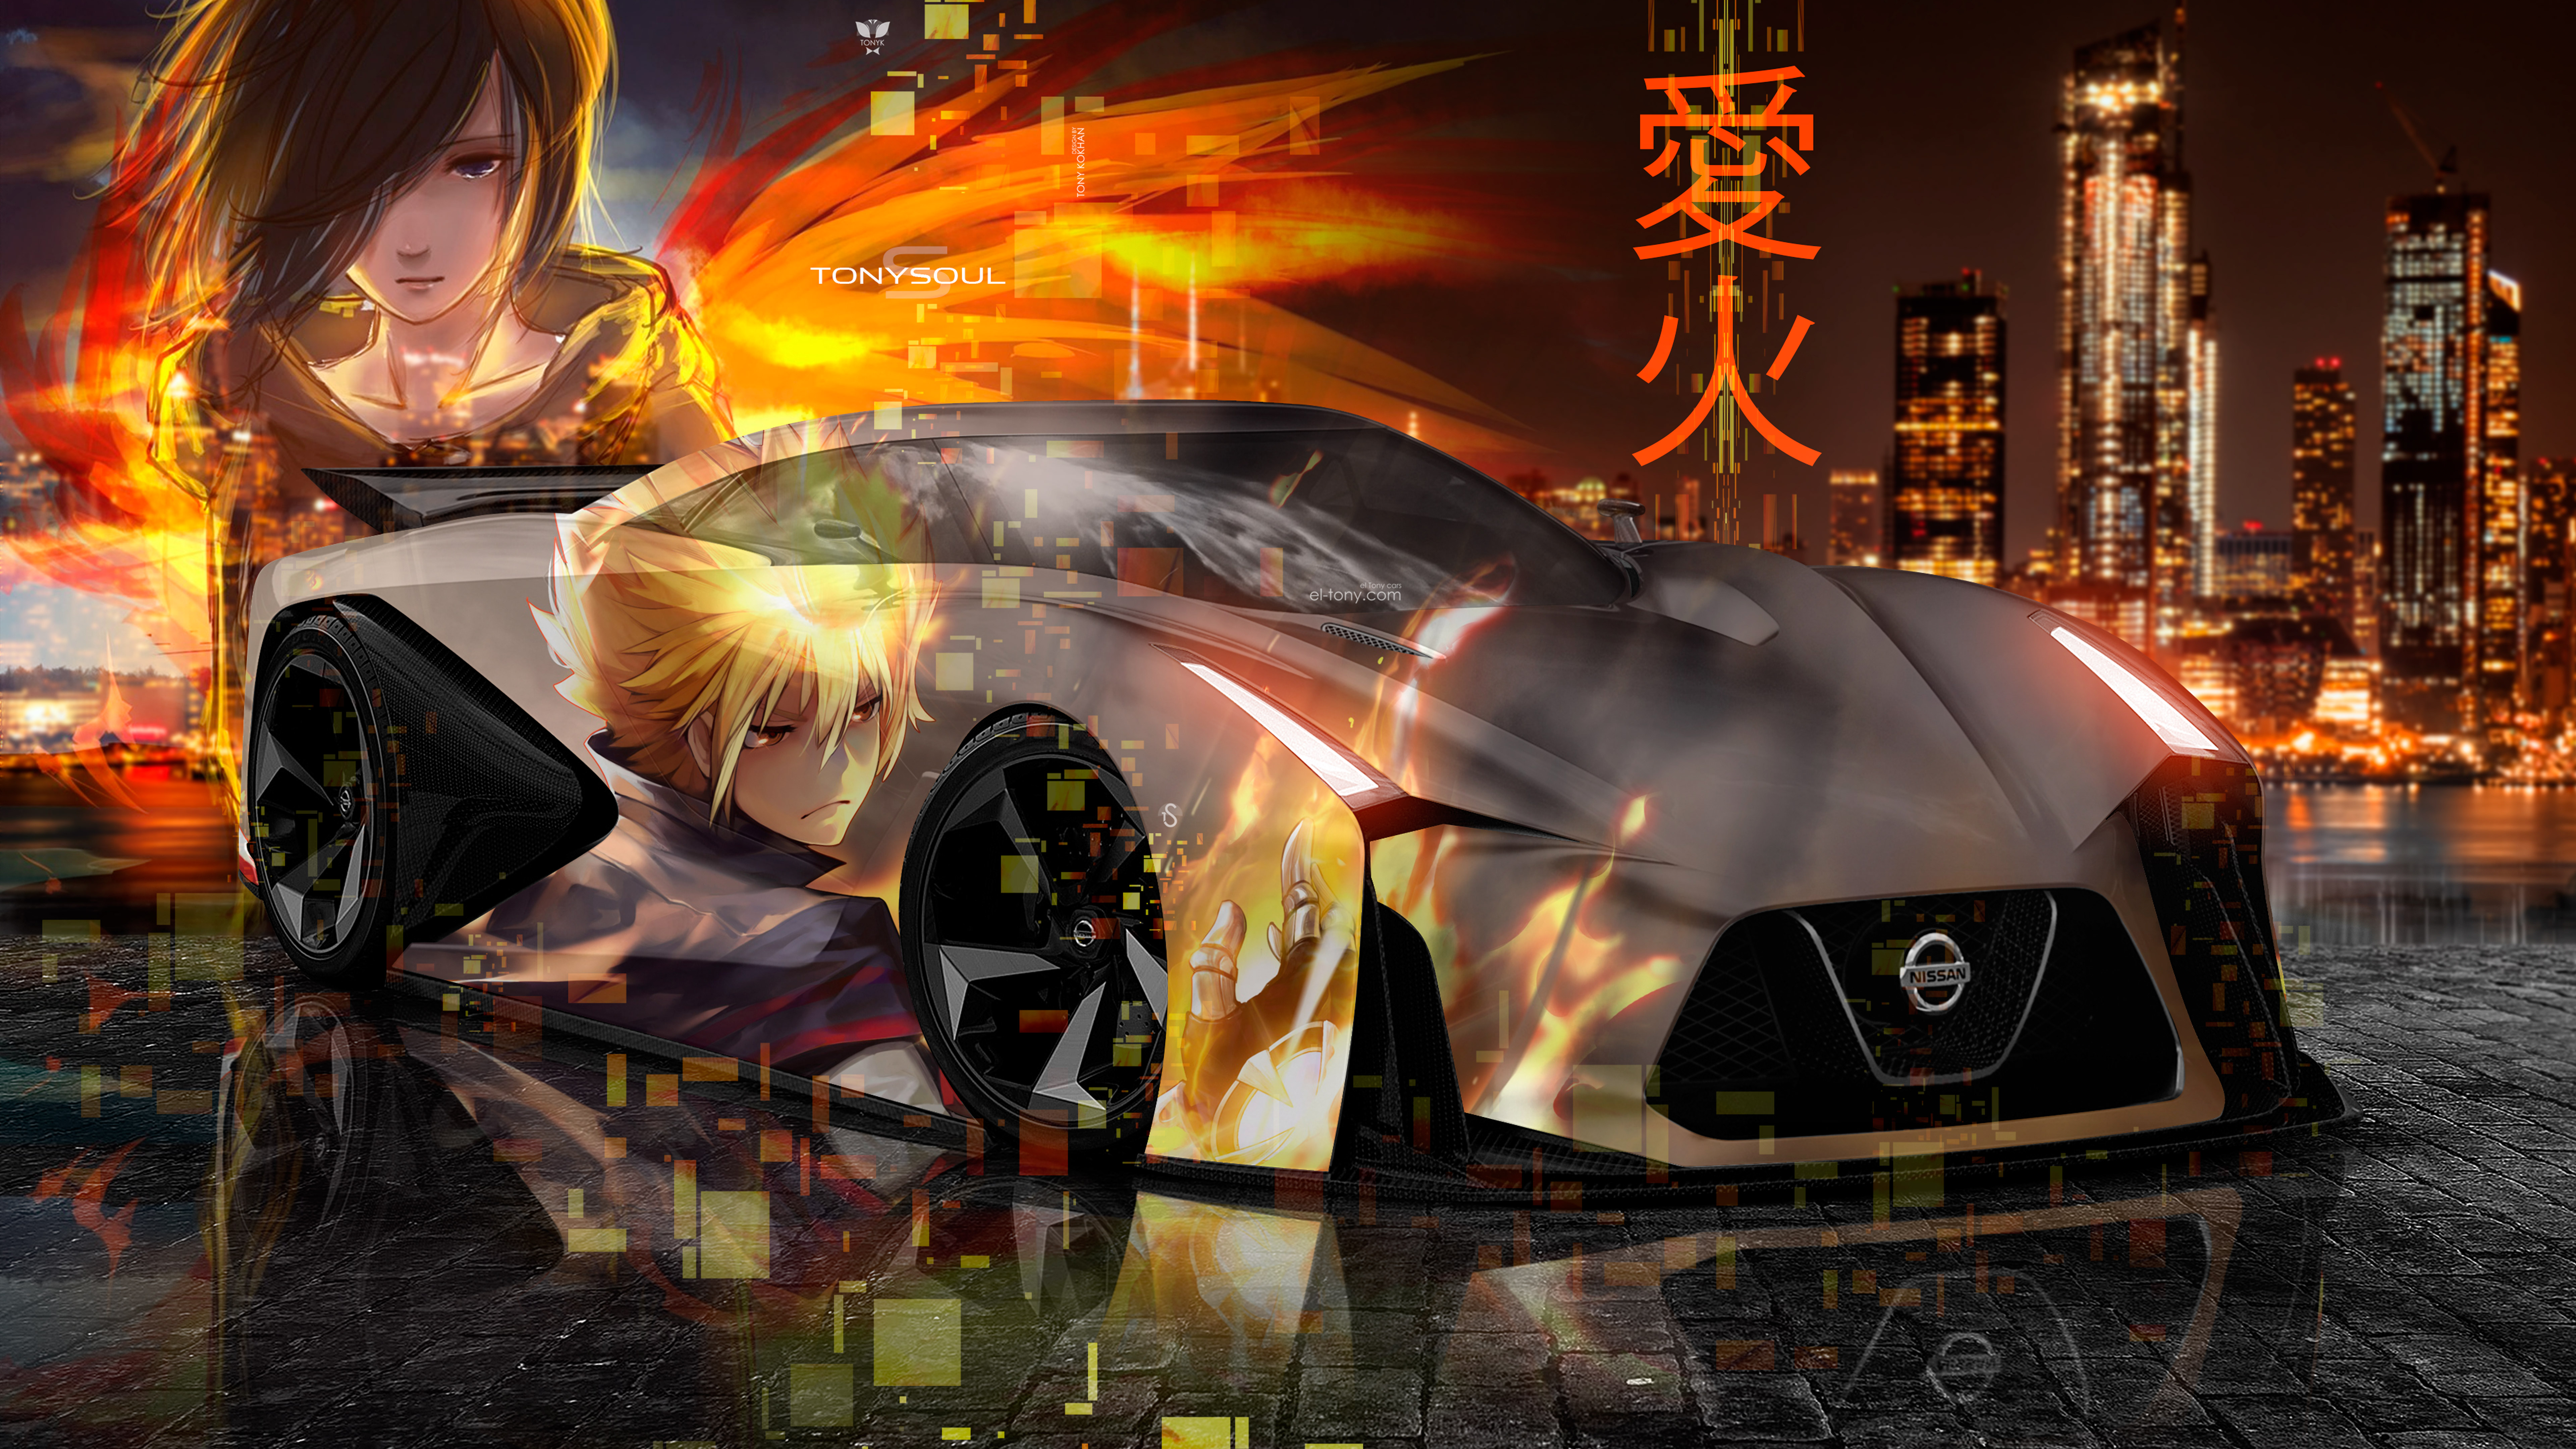 Nissan Gtr Super Anime Girl Boy Love Fire Aerography Night